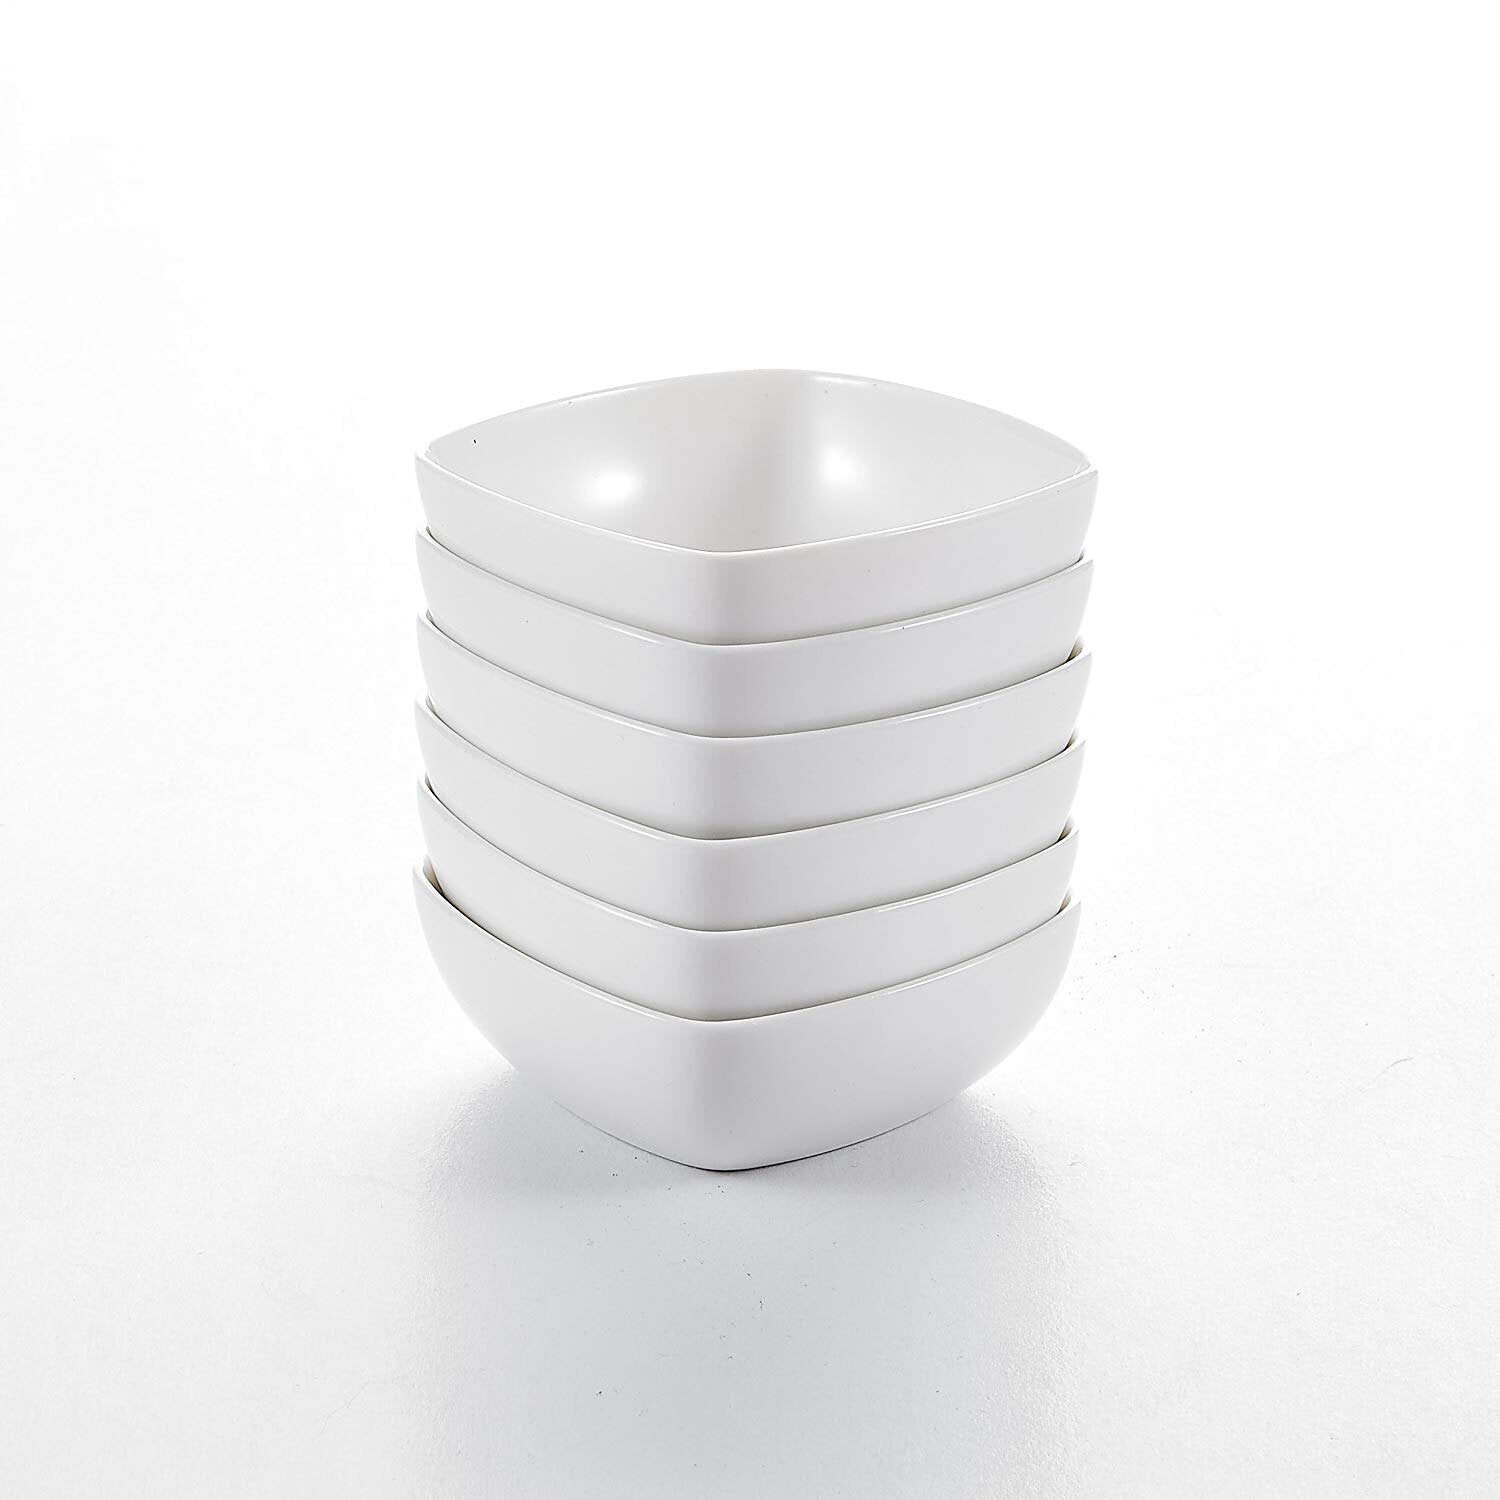 White Porcelain  Set of 6 Ramekins Dessert/Snack Bowl (4") - Nordic Side - Bowl, Breakfast, Cream, Cup, Dessert, Dishes, Fruit, Kitchen, MALACASA, of, Plate, Porcelain, Pudding, Ramekins, Set